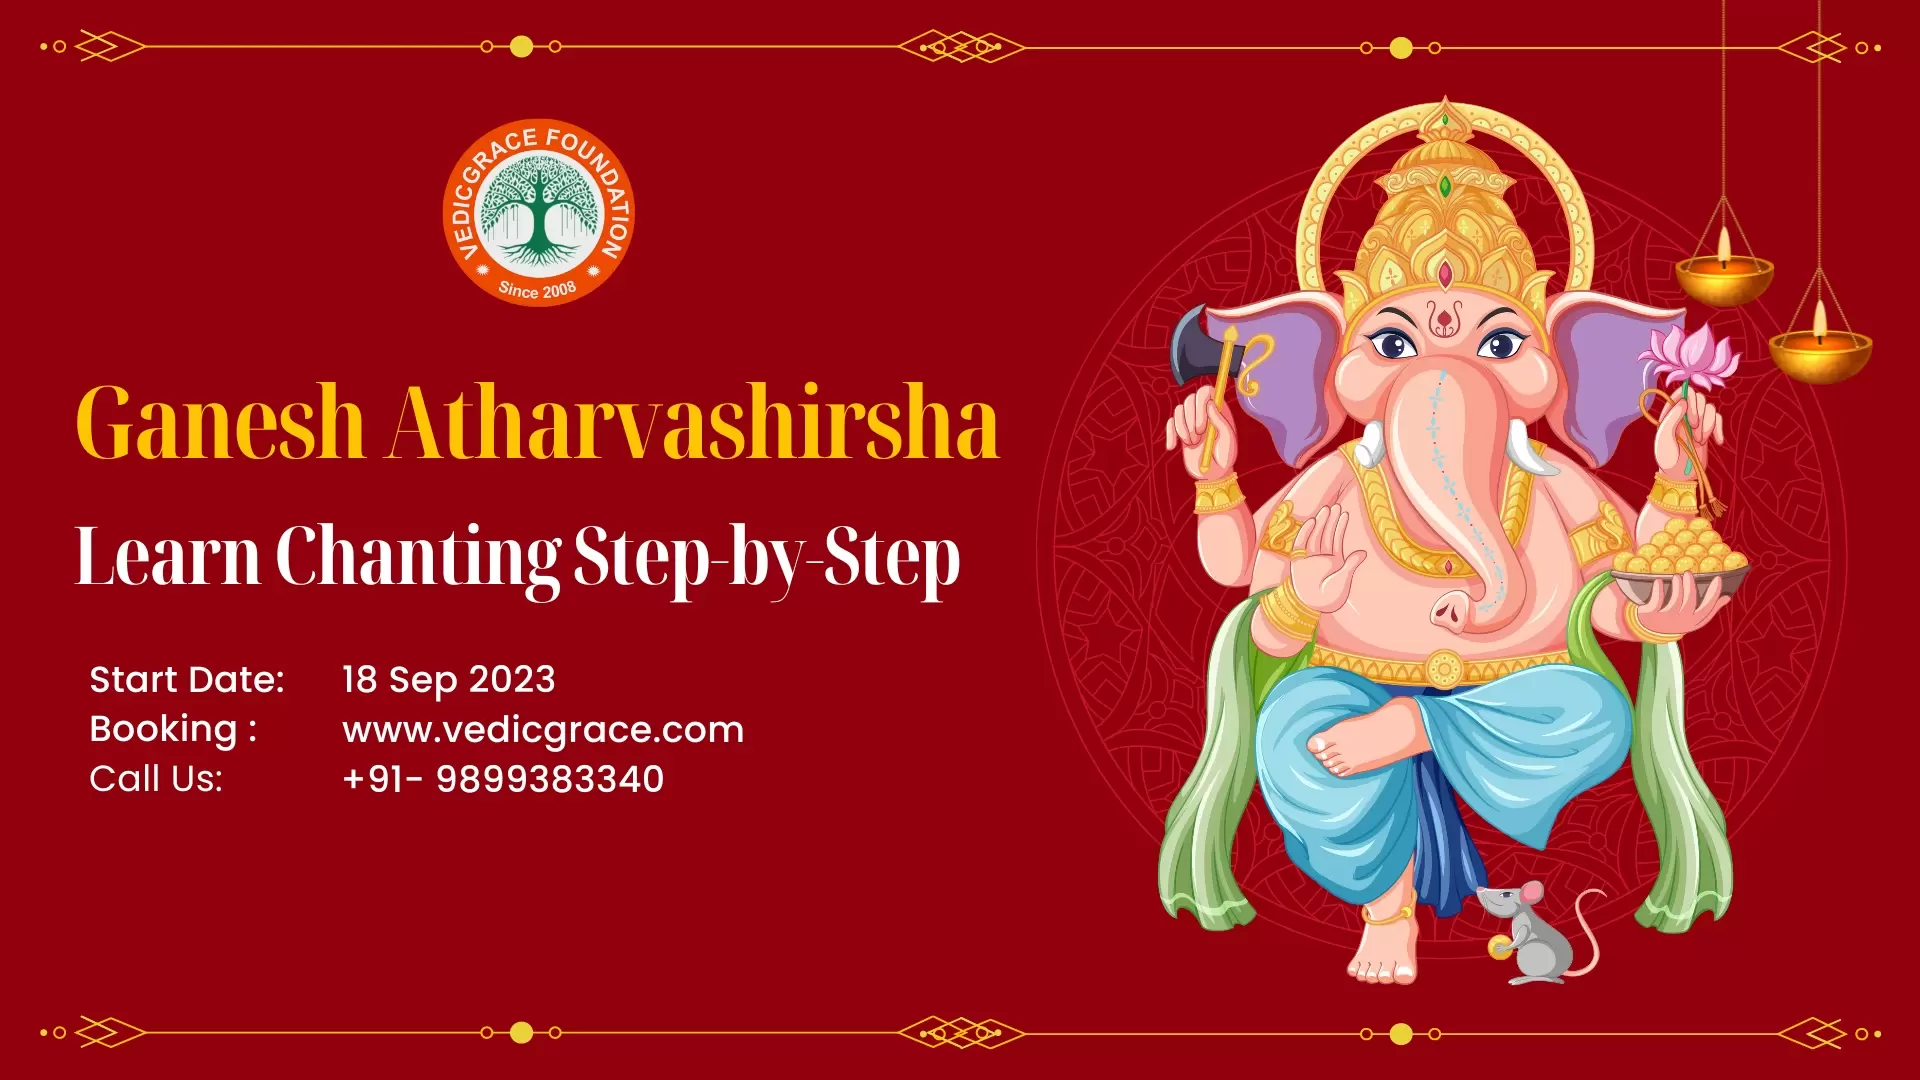 Ganesh Atharvashirsha - Learn Chanting Step-by-Step